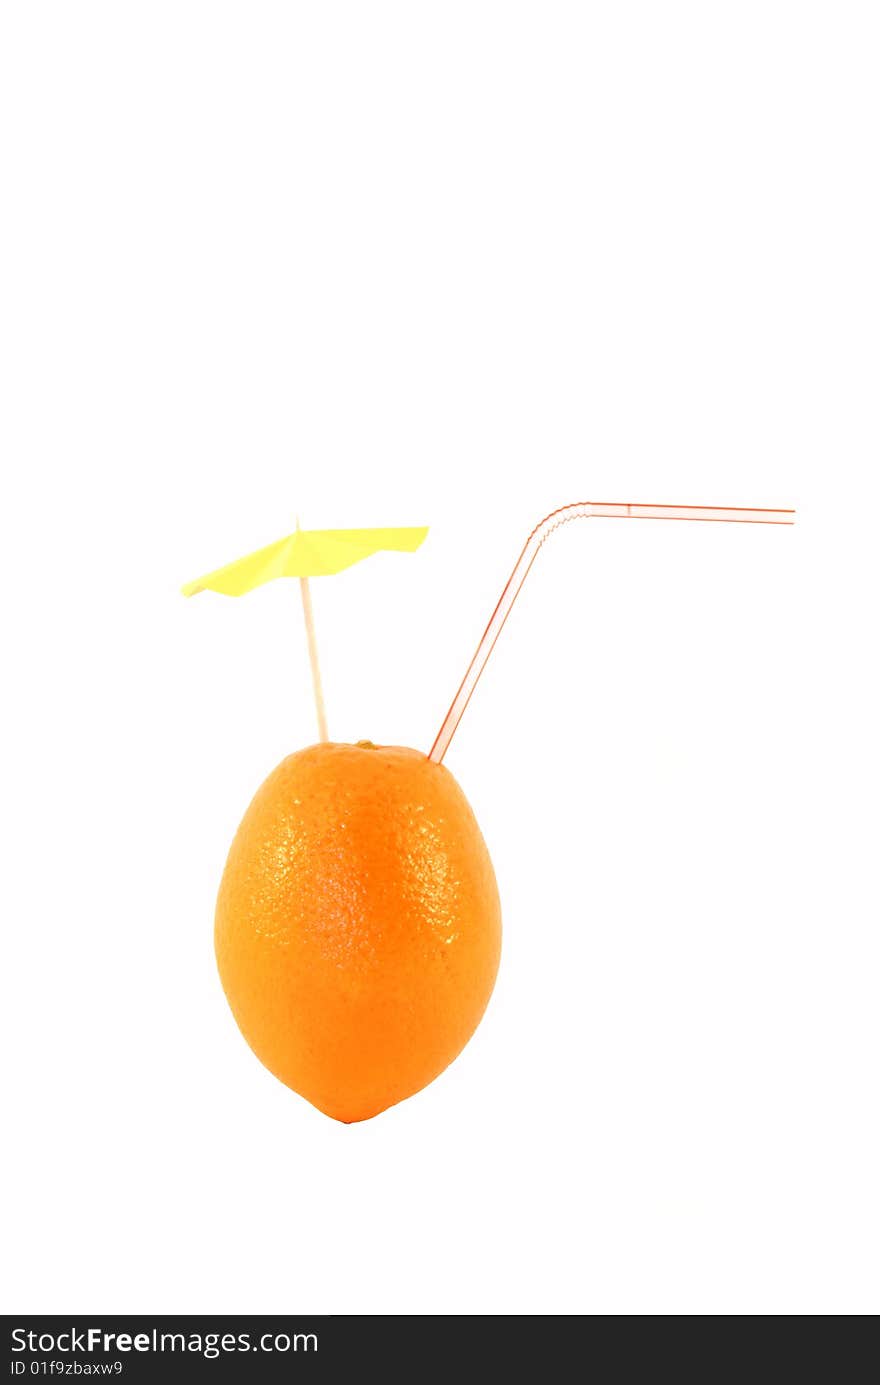 Orange with tubule and umbrella